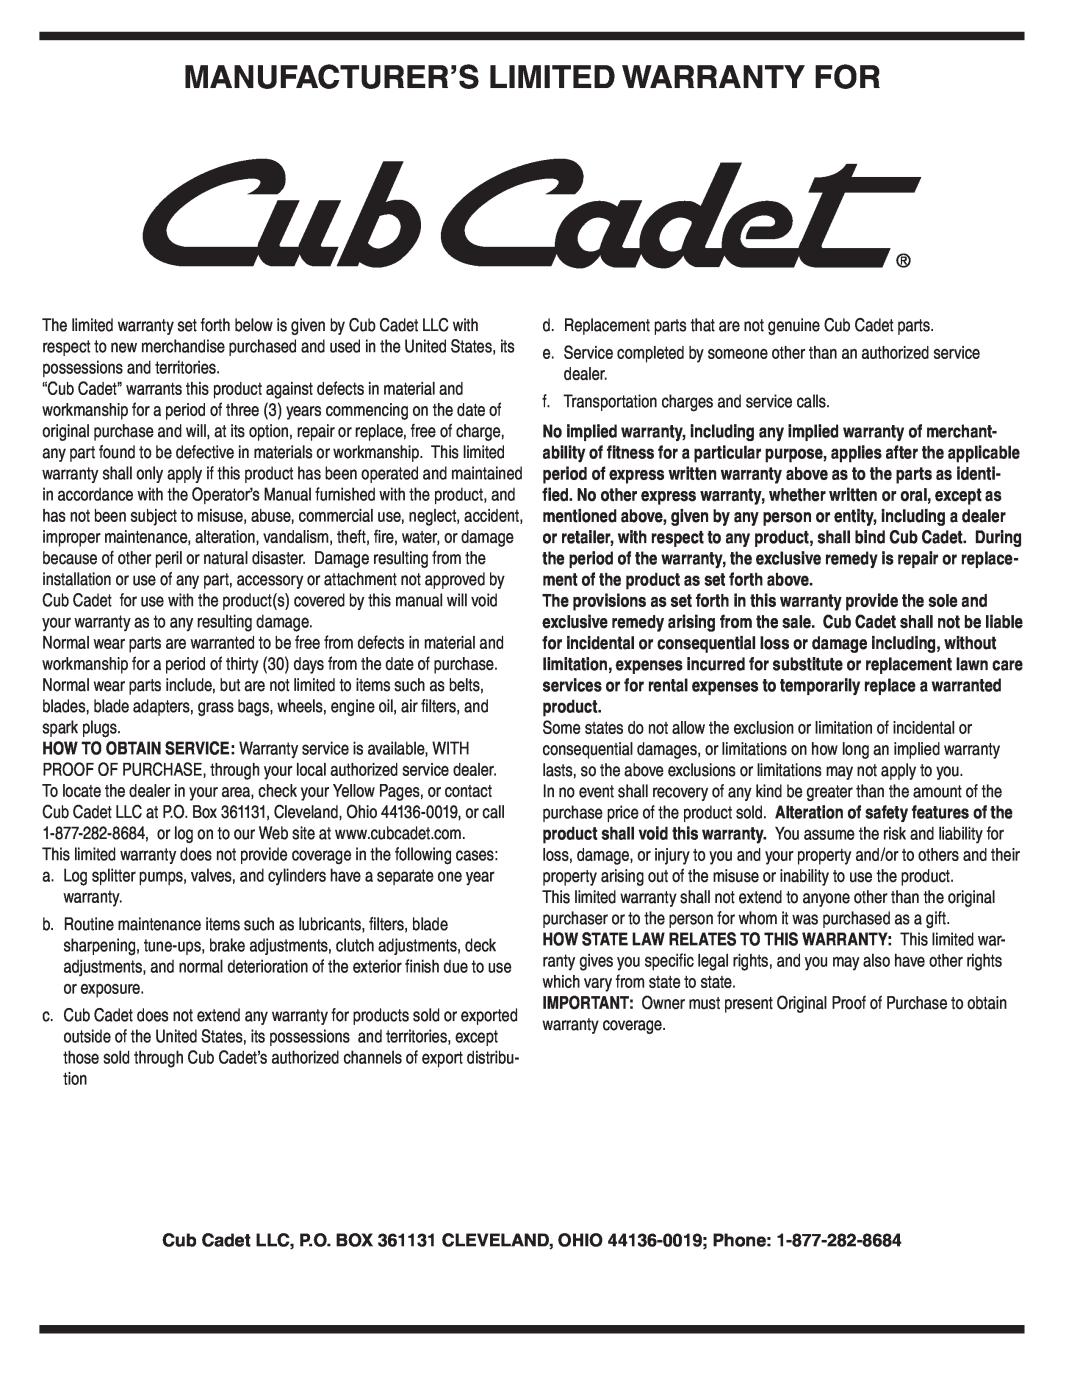 Cub Cadet 18M warranty Manufacturer’S Limited Warranty For, Cub Cadet LLC, P.O. BOX 361131 CLEVELAND, OHIO 44136-0019 Phone 